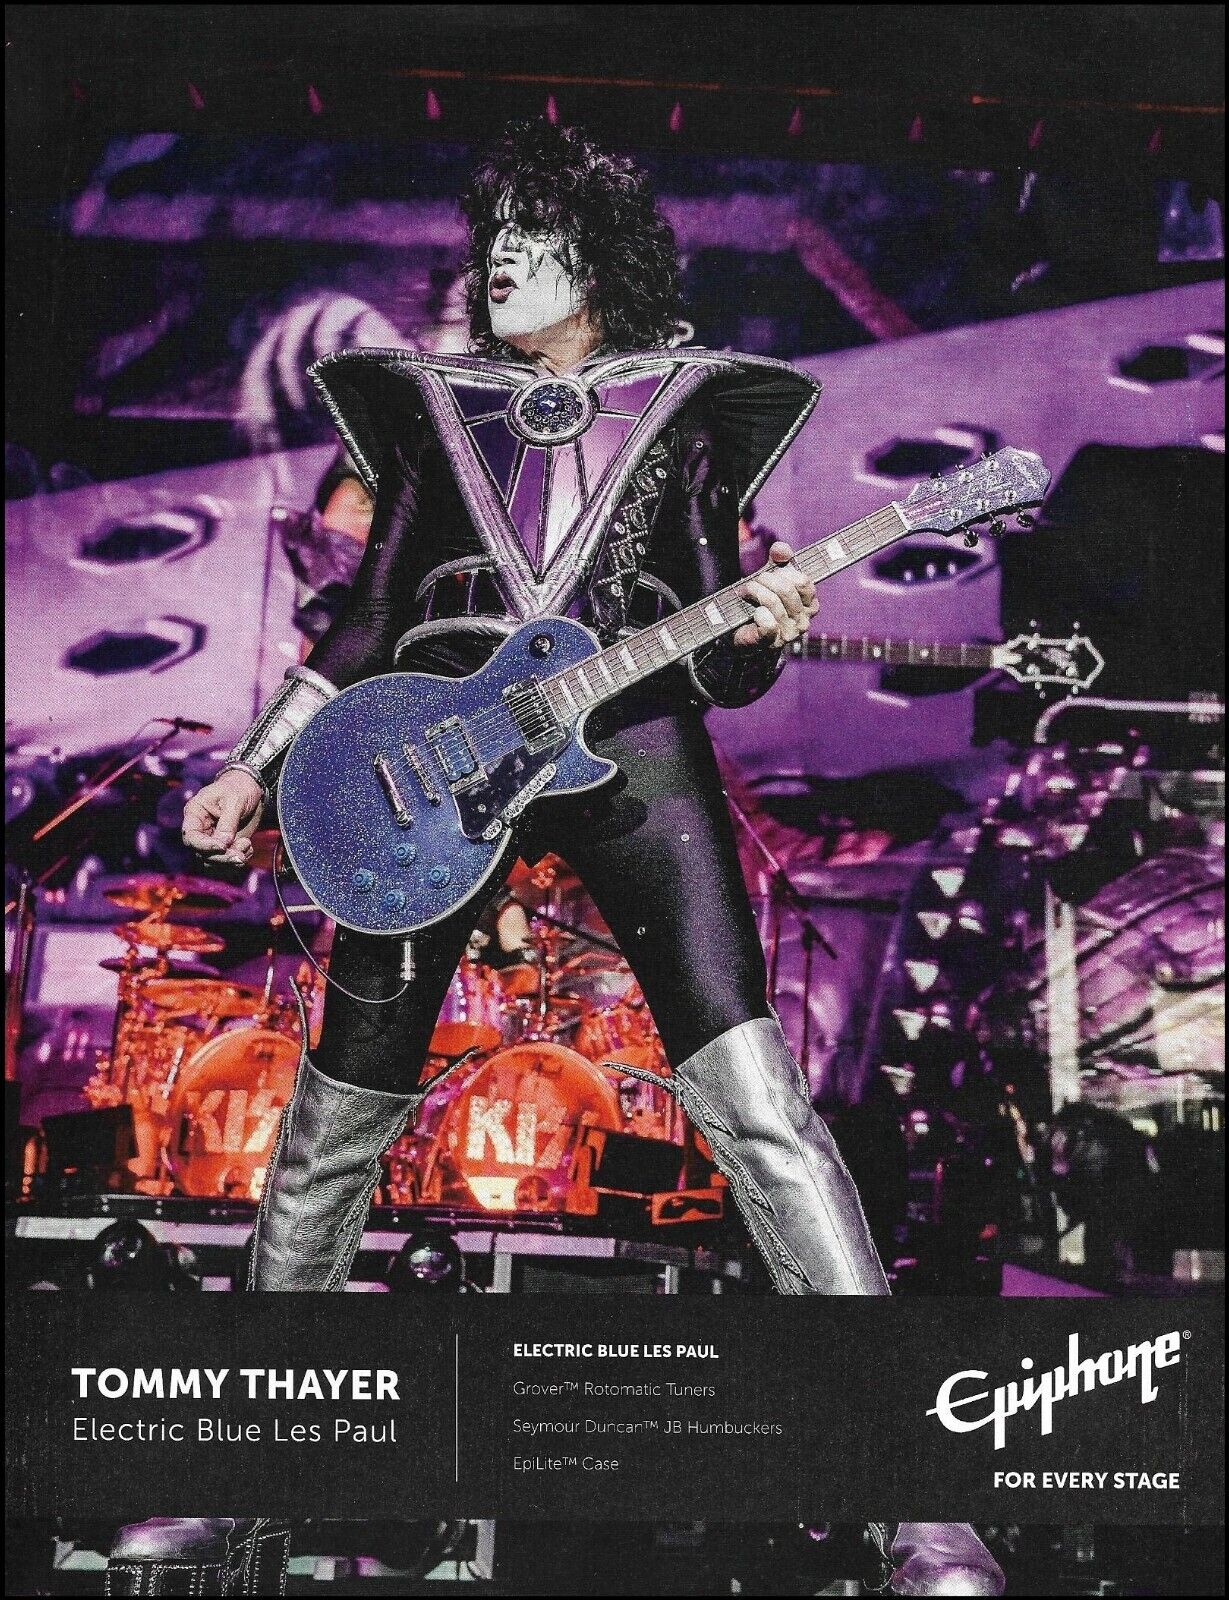 KISS Tommy Thayer Signature Epiphone Electric Blue Les Paul guitar advertisement